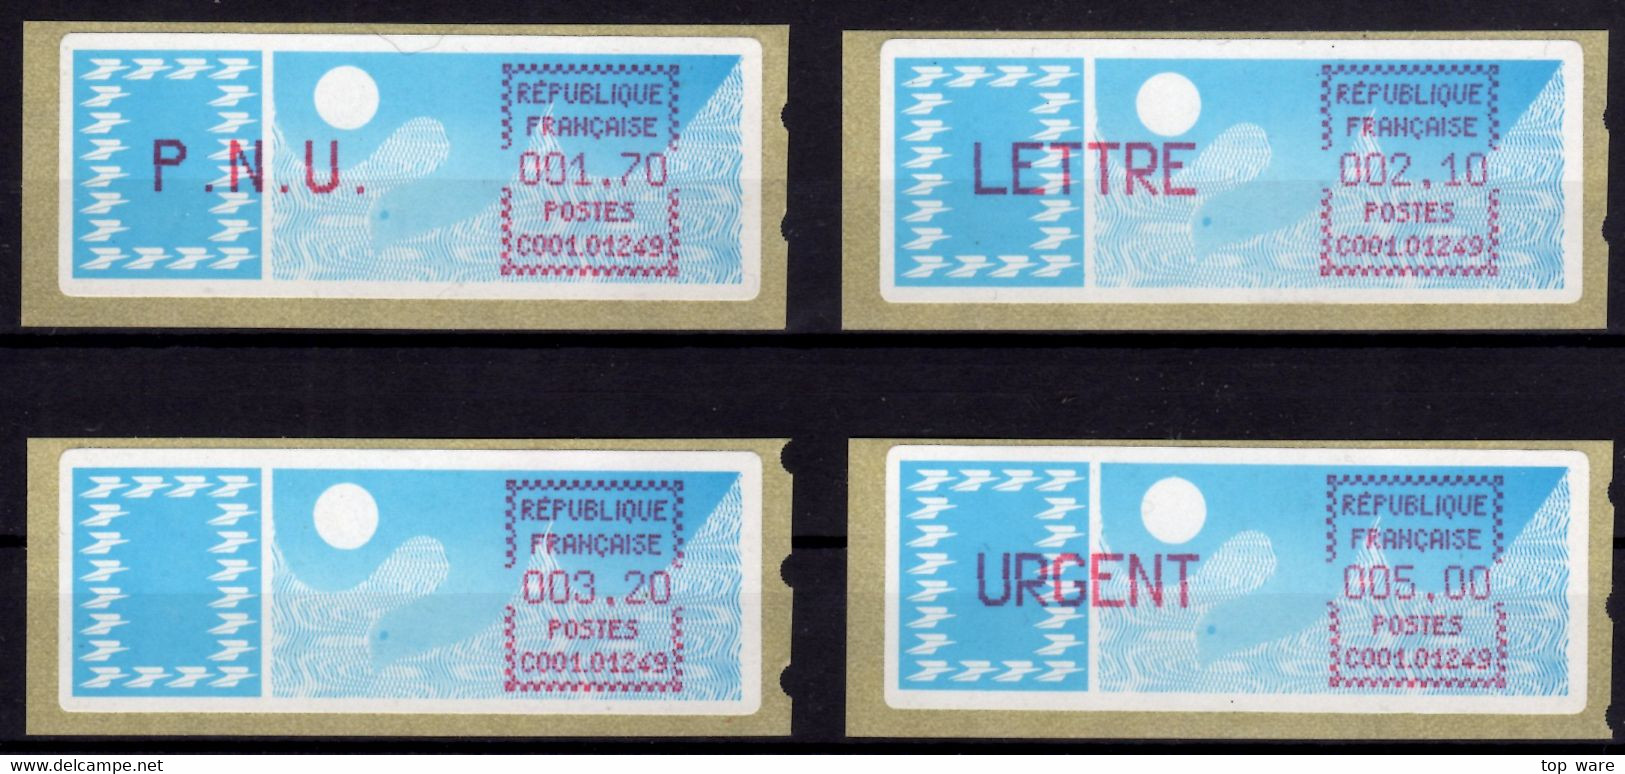 France ATM Stamps C001.01249 Michel 6.3 Zd Series ZS1 Neuf / MNH / Crouzet LSA Distributeurs Automatenmarken Frama Lisa - 1985 Papier « Carrier »